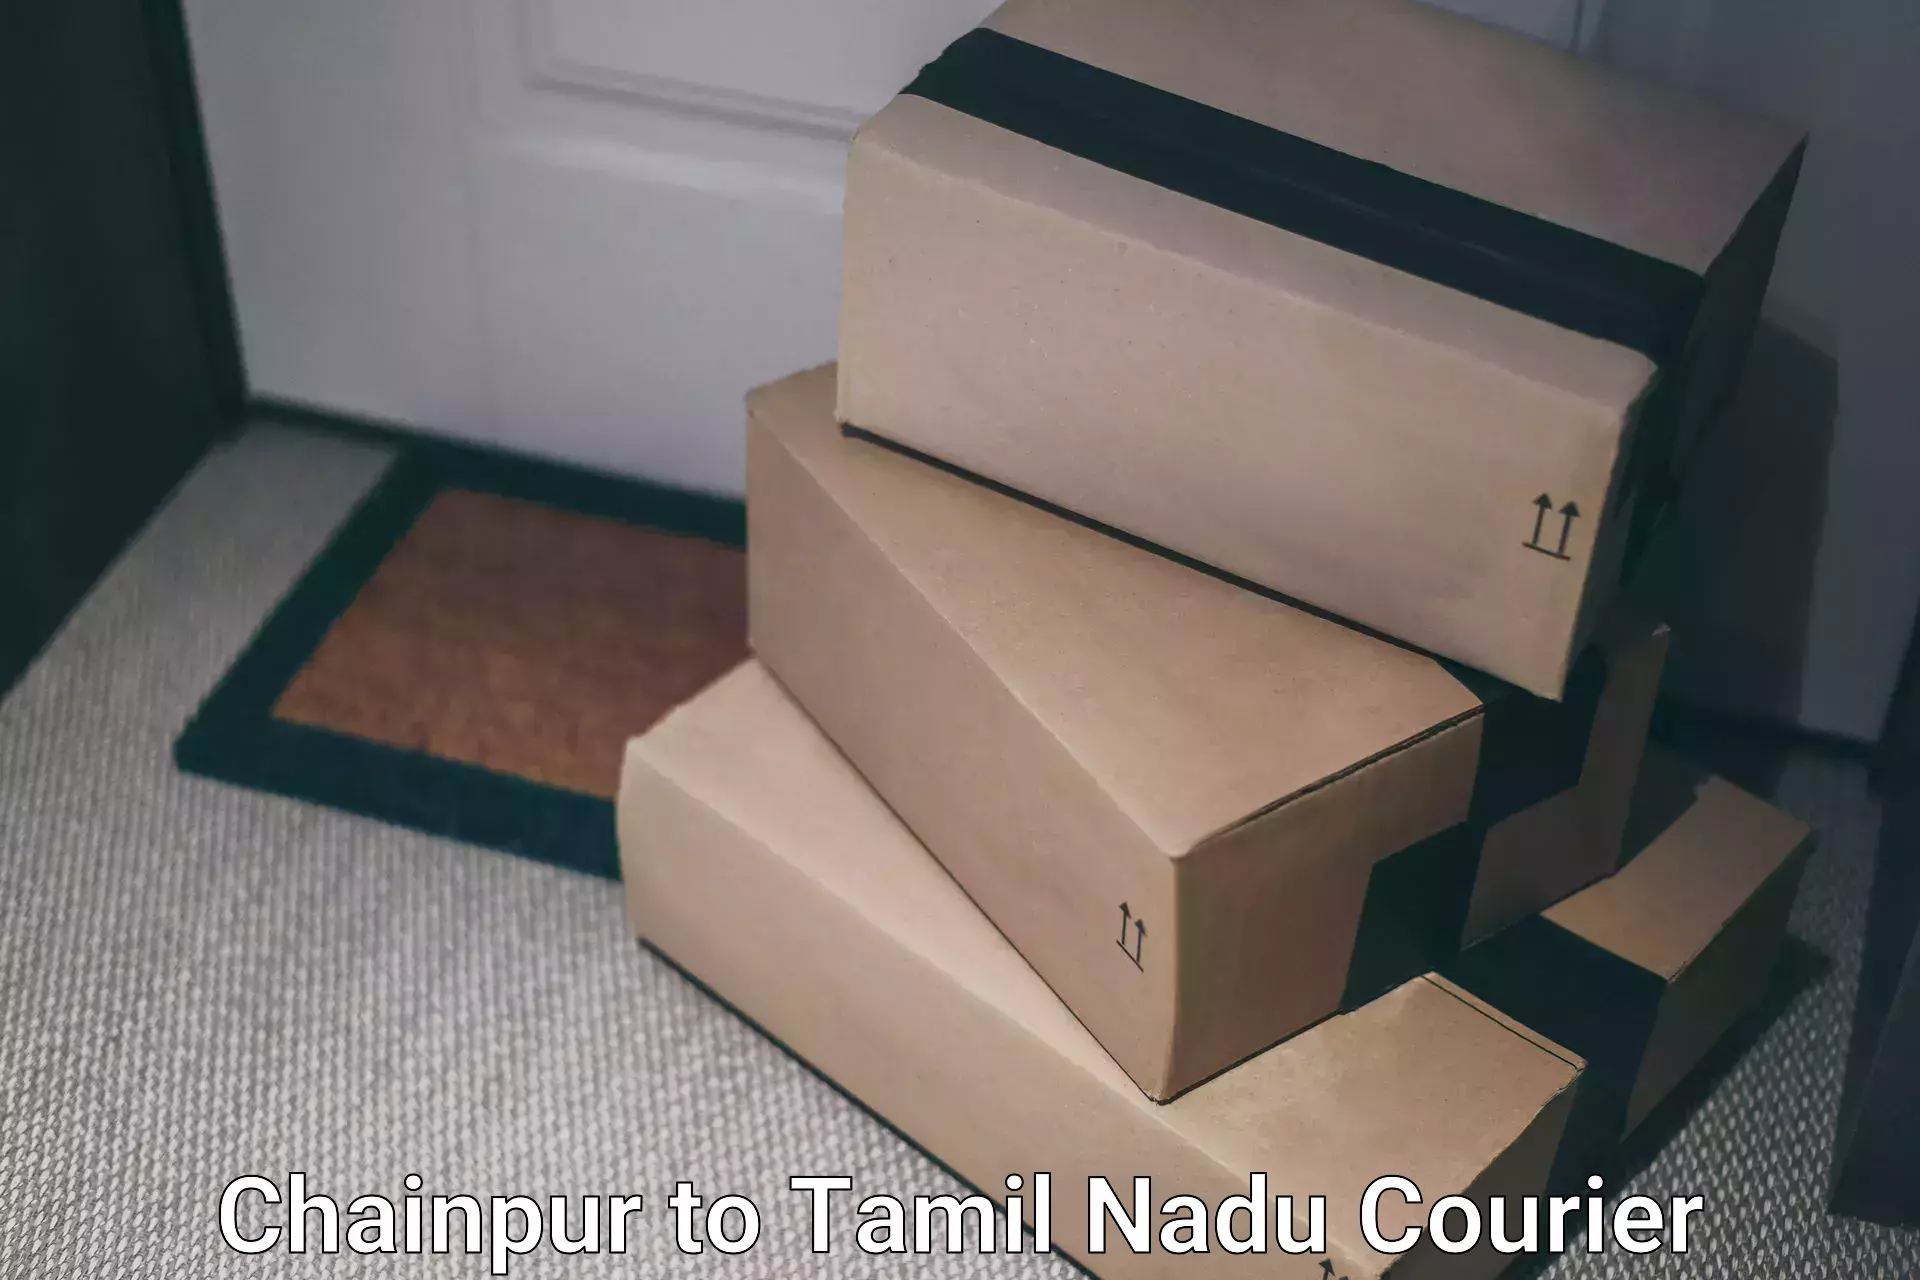 Courier app Chainpur to Ambur